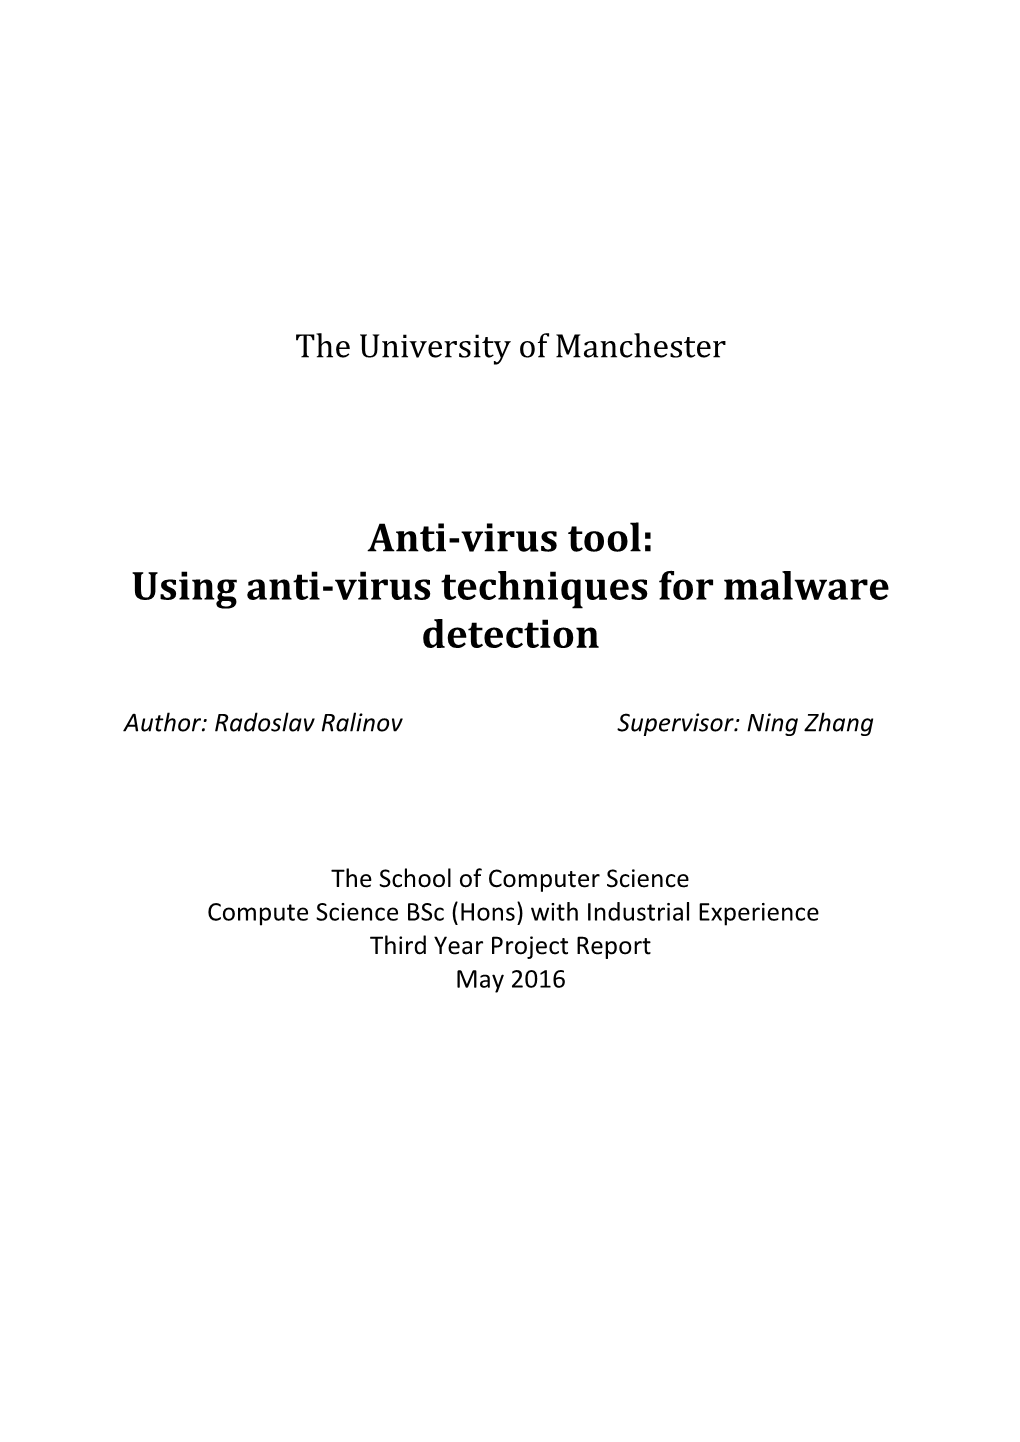 Using Anti-Virus Techniques for Malware Detection